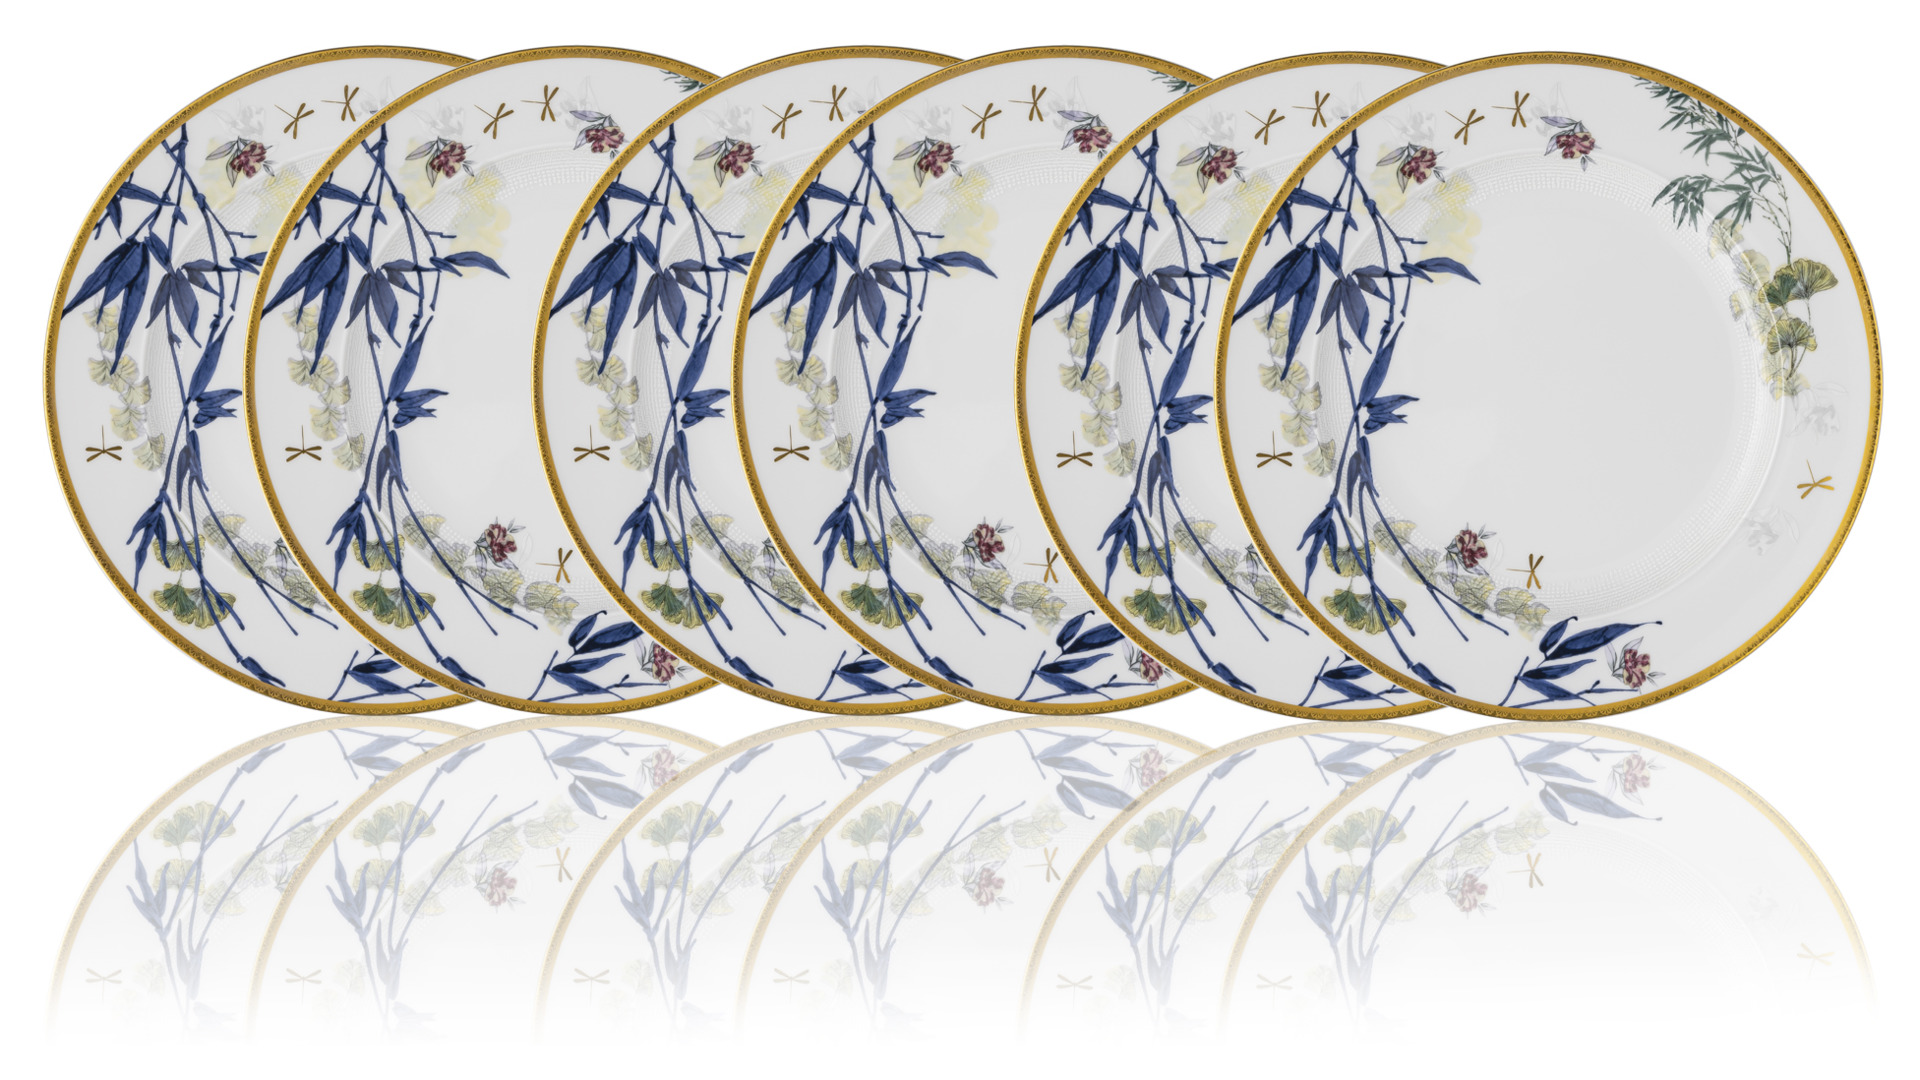 Набор тарелок обеденных Rosenthal Турандот 27 см, фарфор, белый, золотой кант, 6 шт